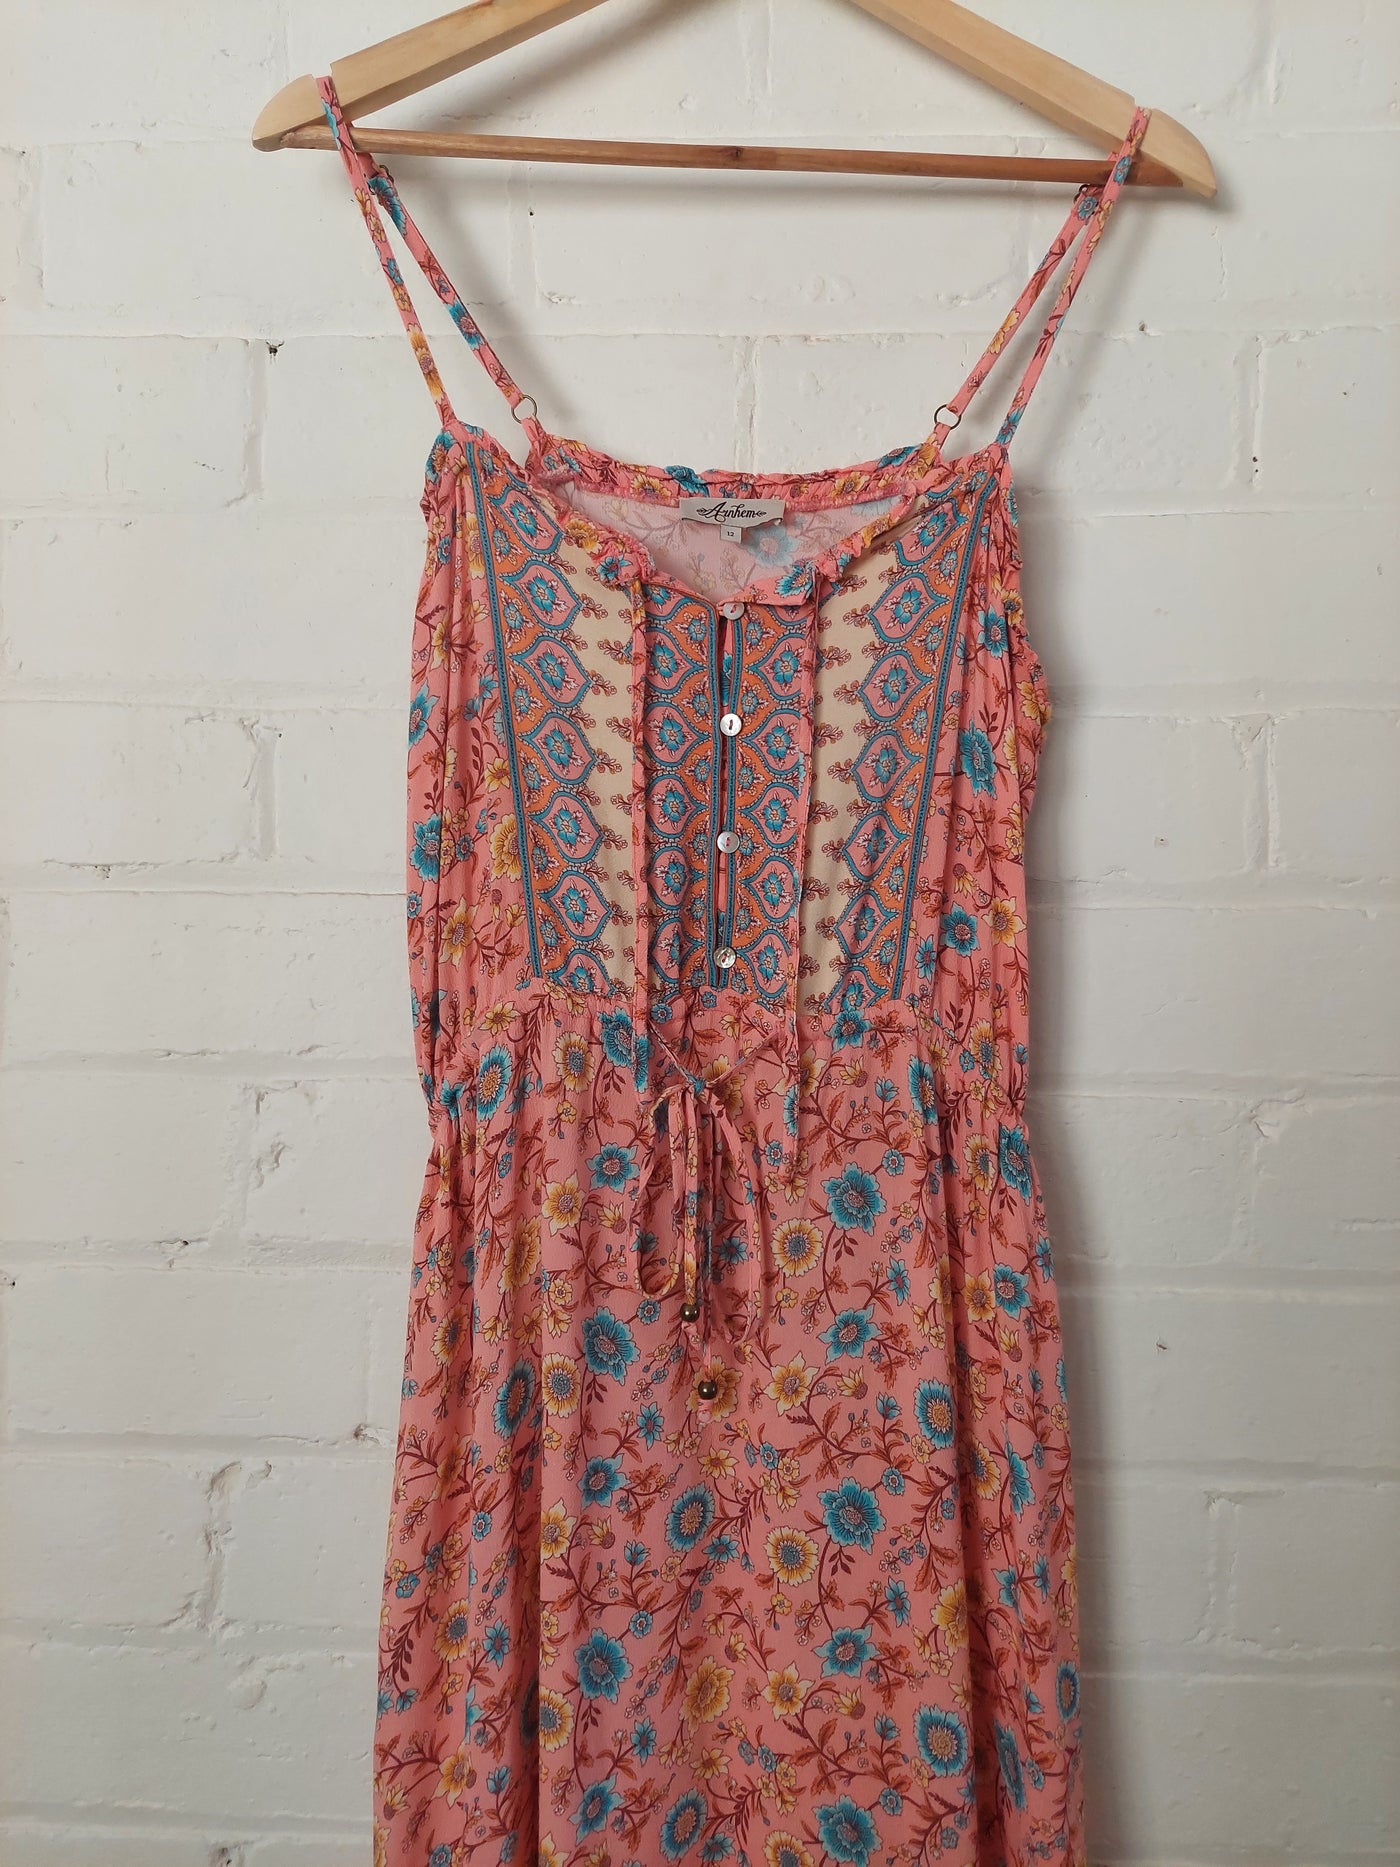 Arnhem Clothing 'Bijoux' Strappy Midi Dress in Coral, Size 12